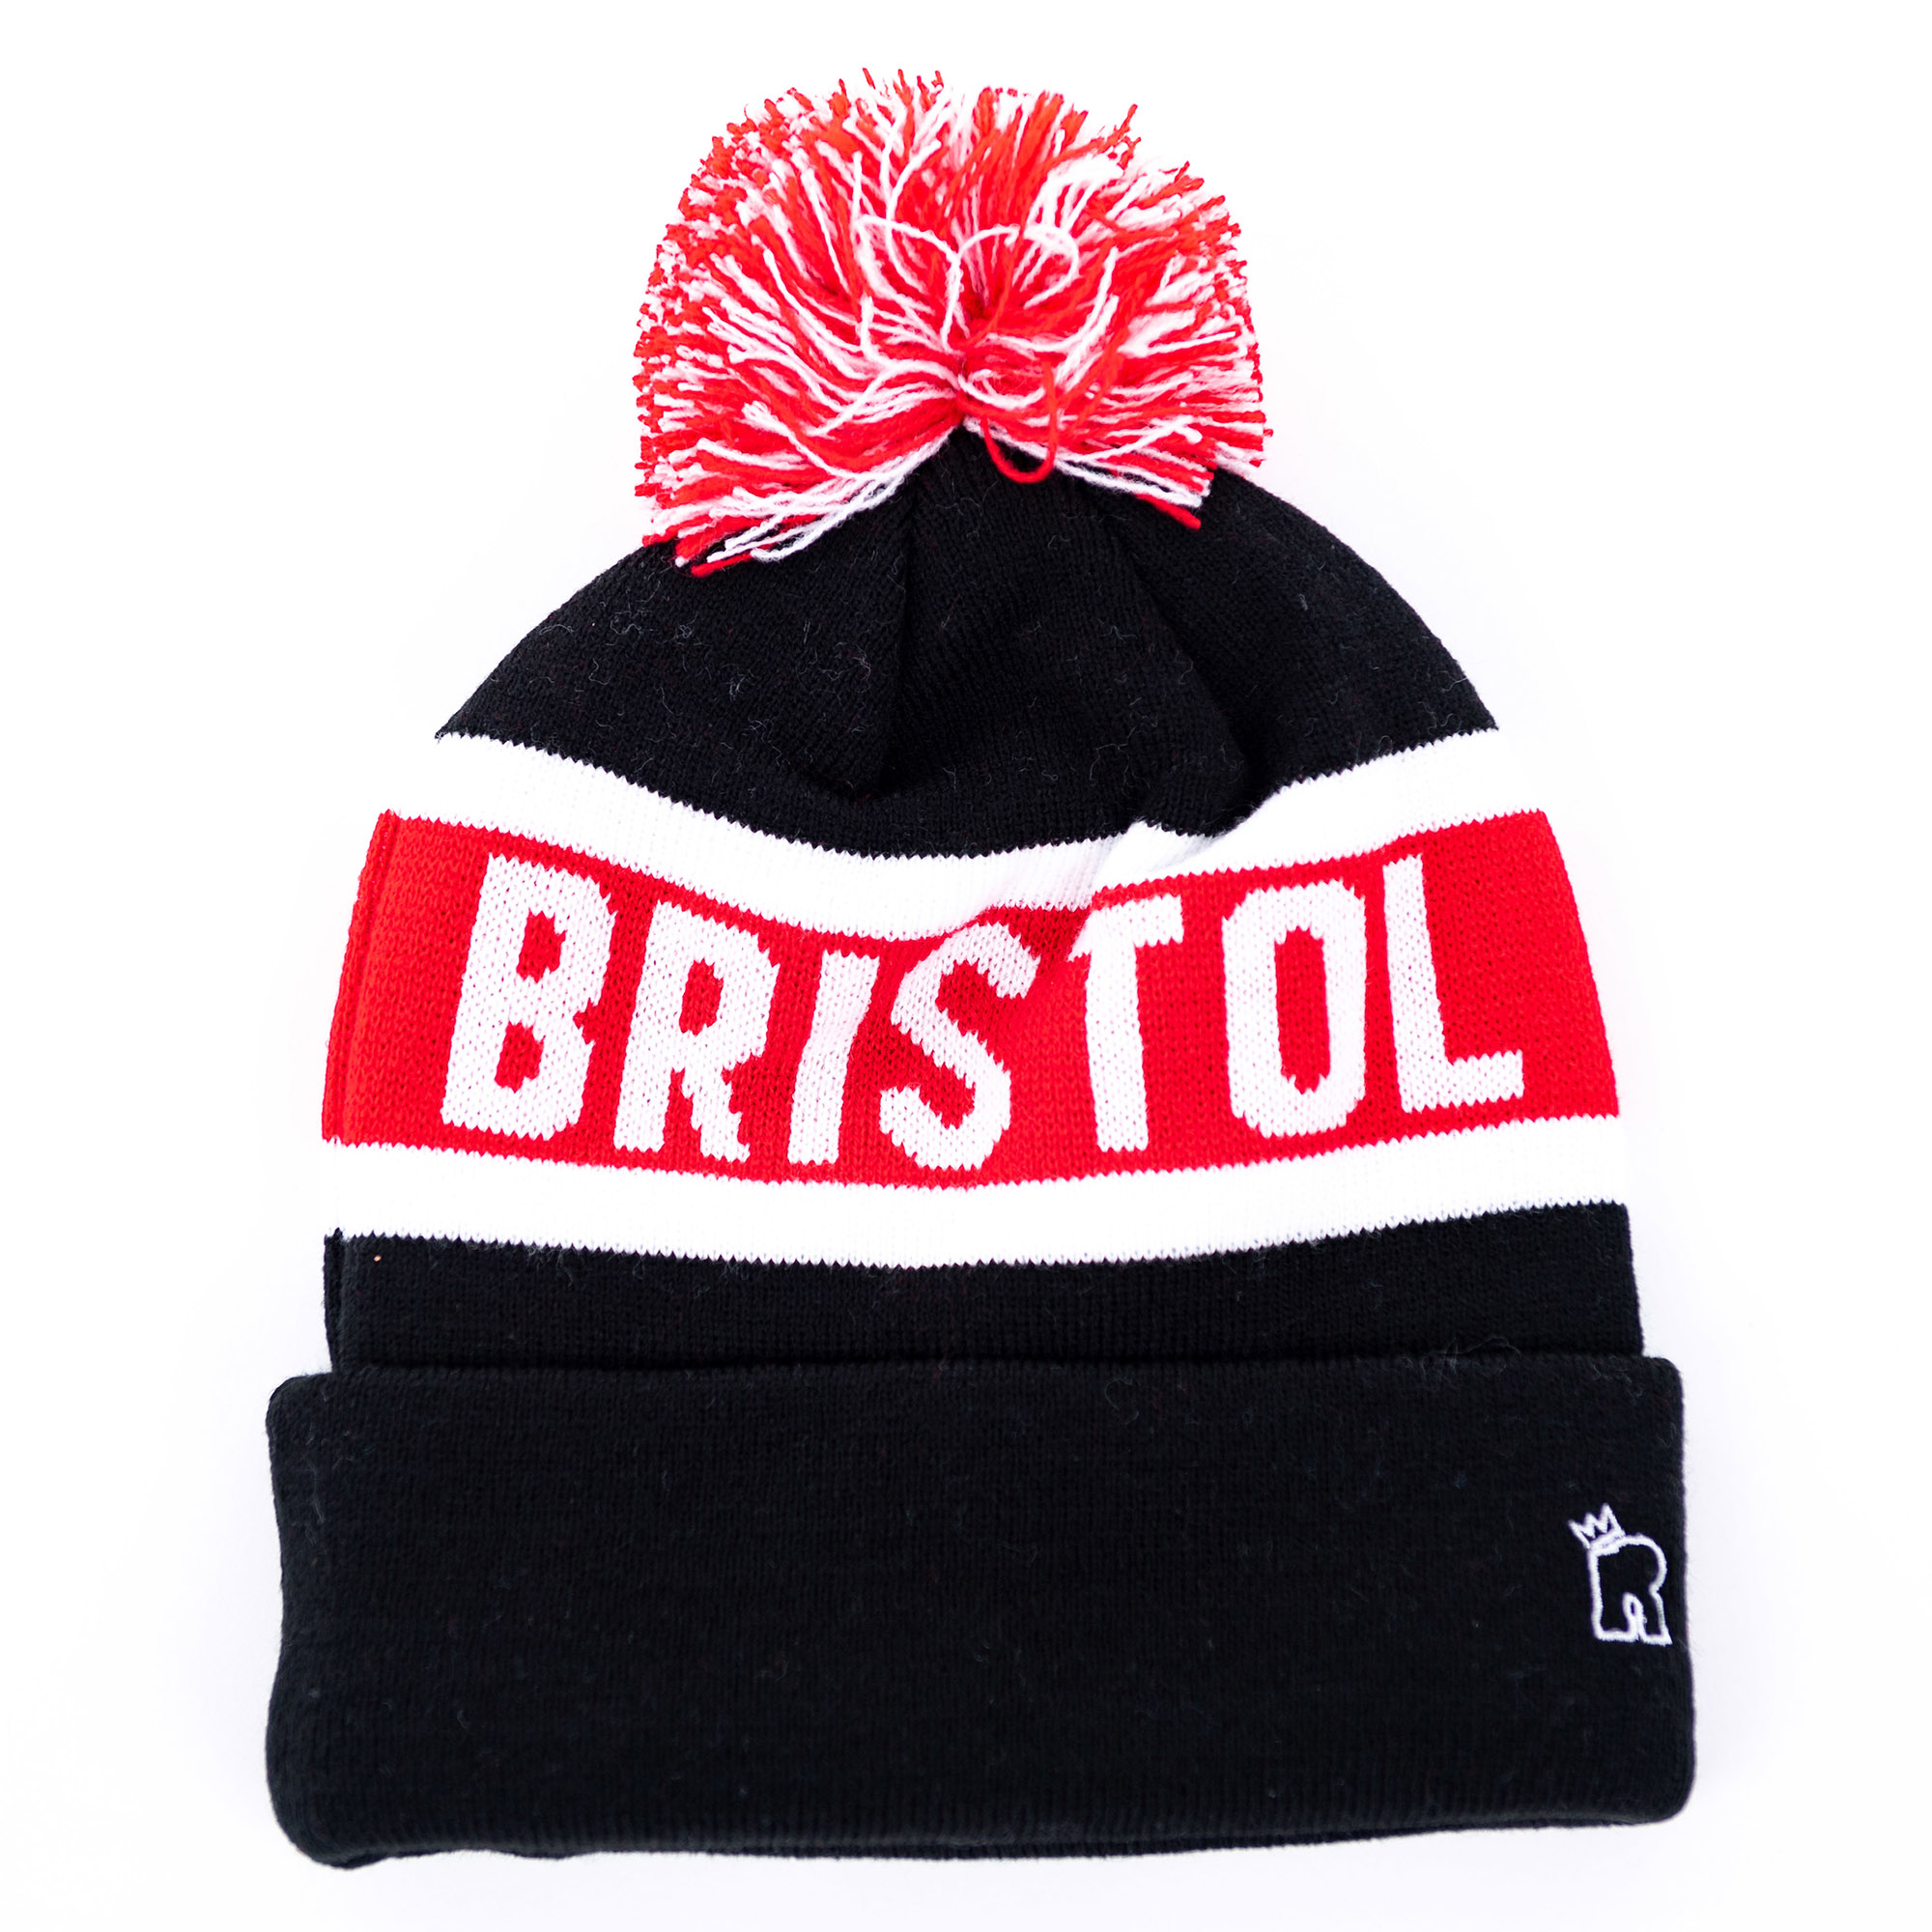 Bristol City Bobble Hat 